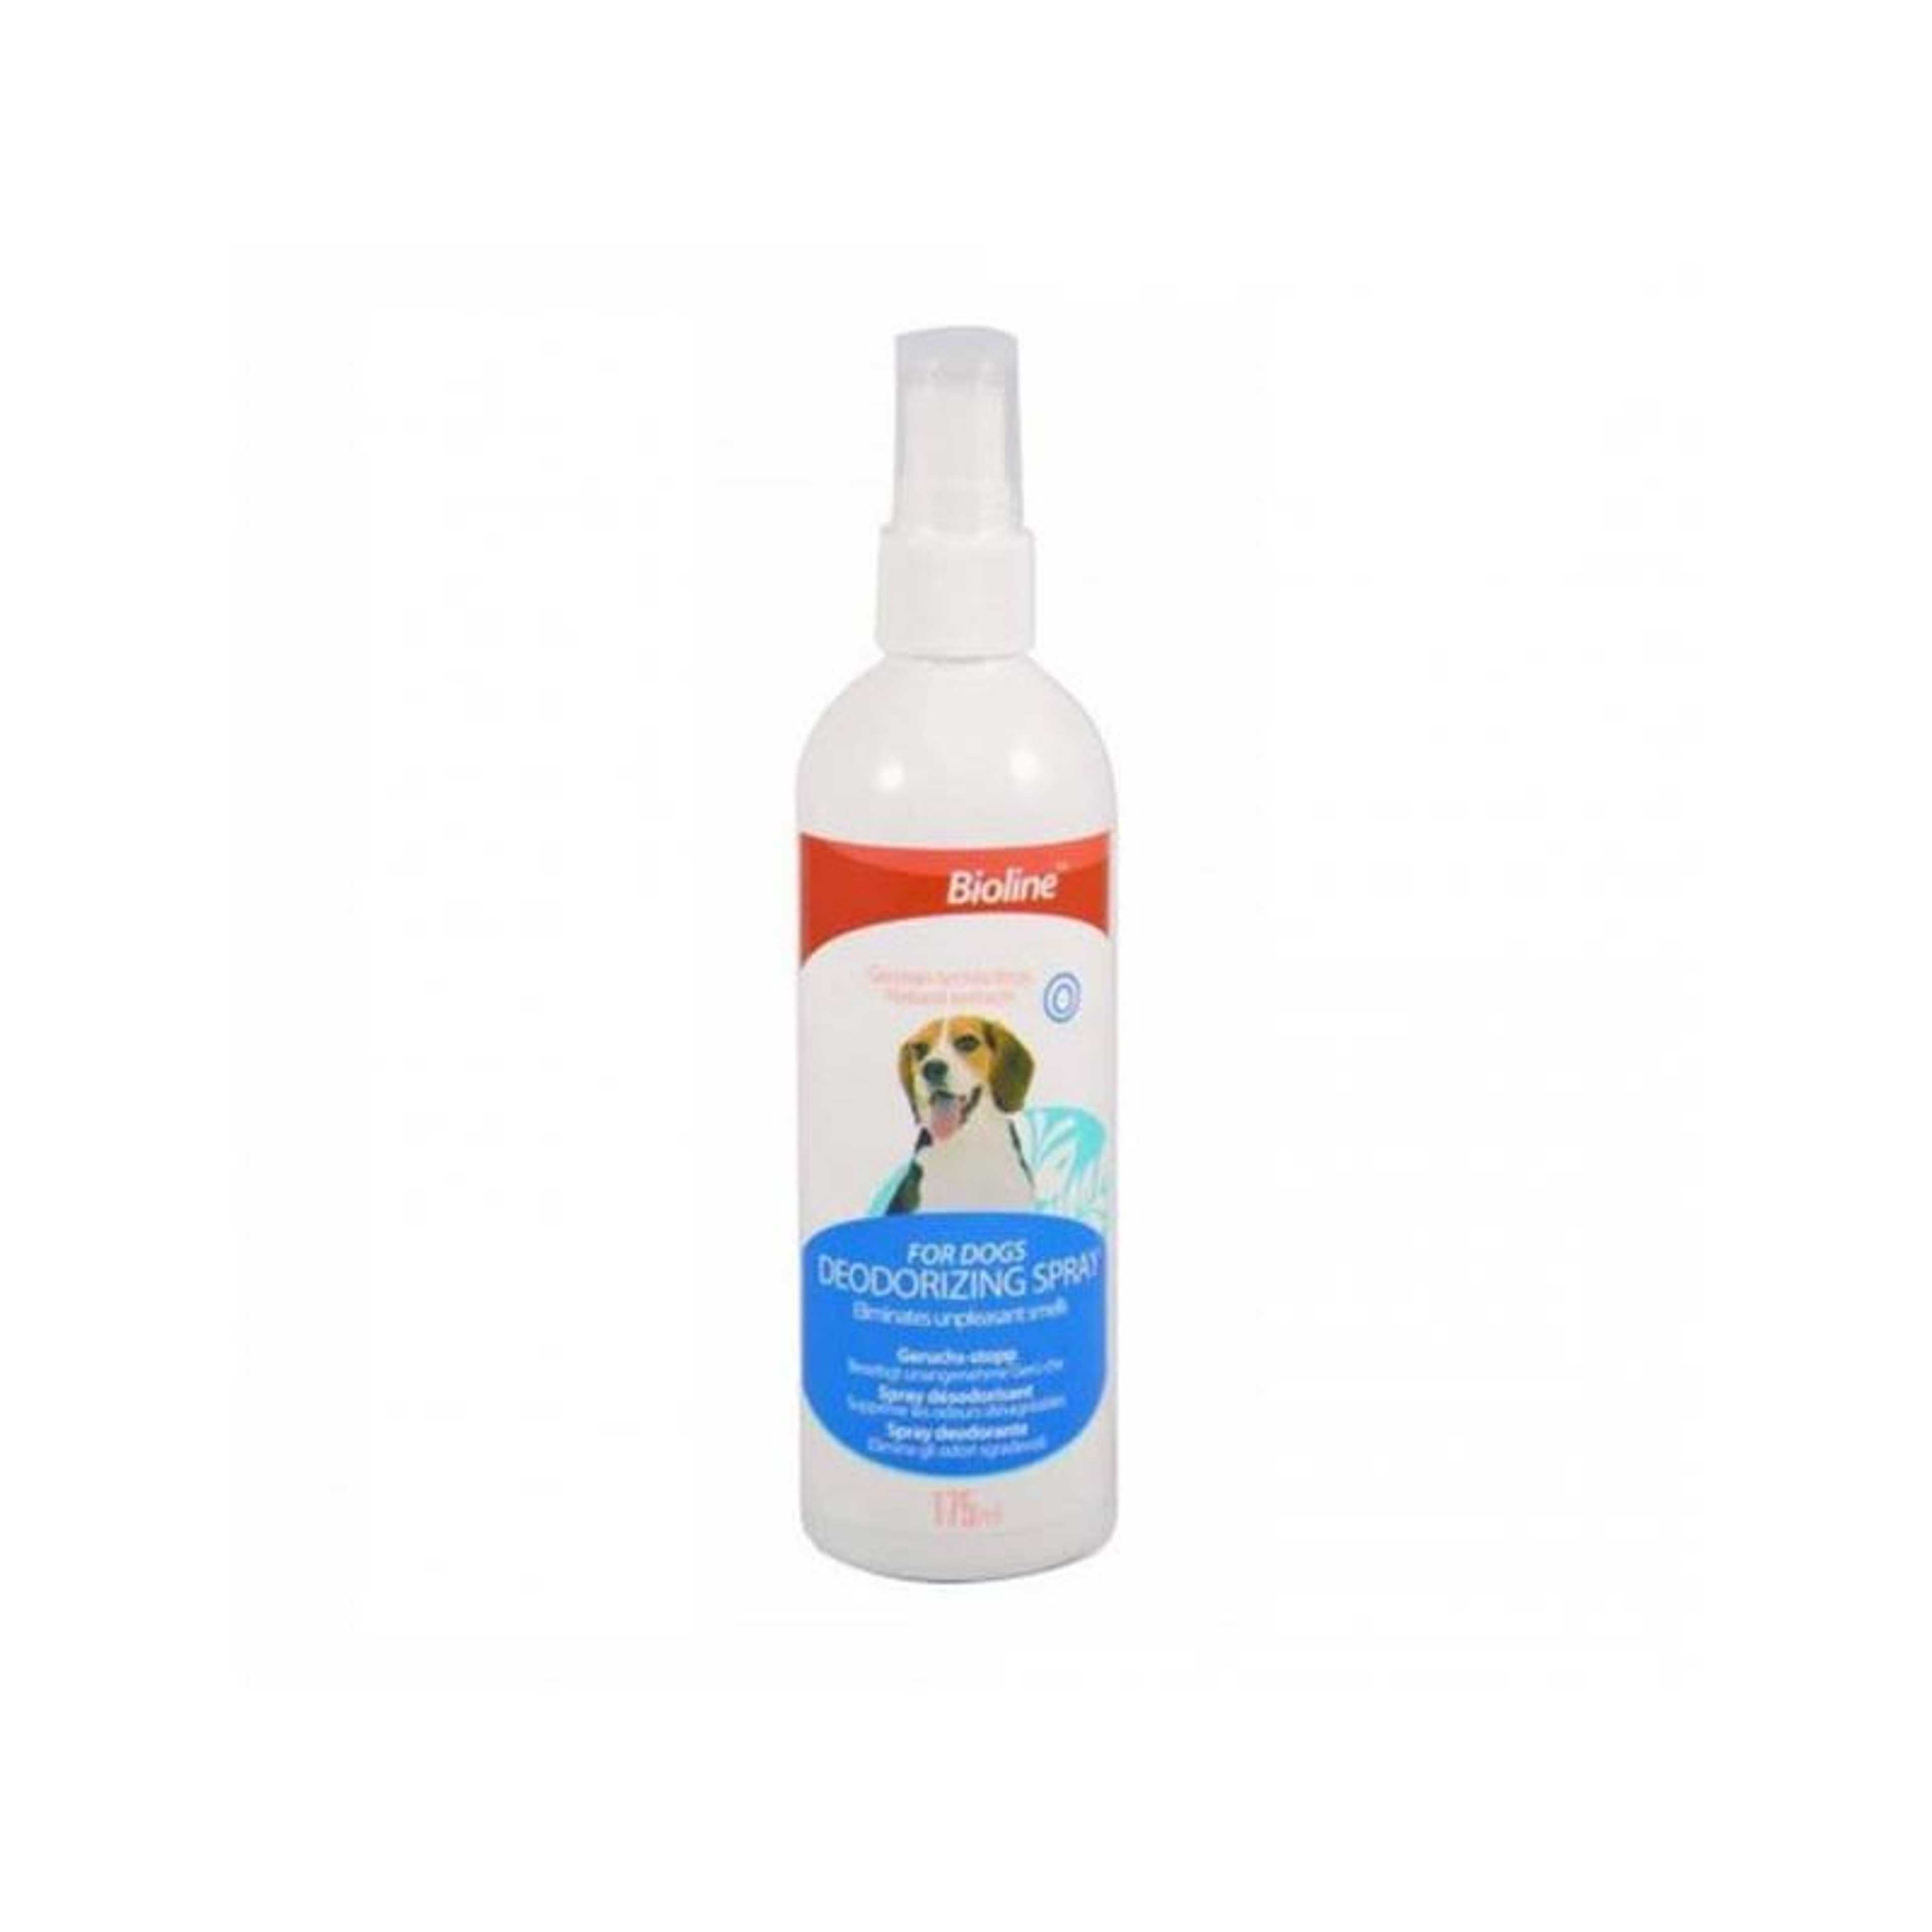 Bioline dog deodorizing spray